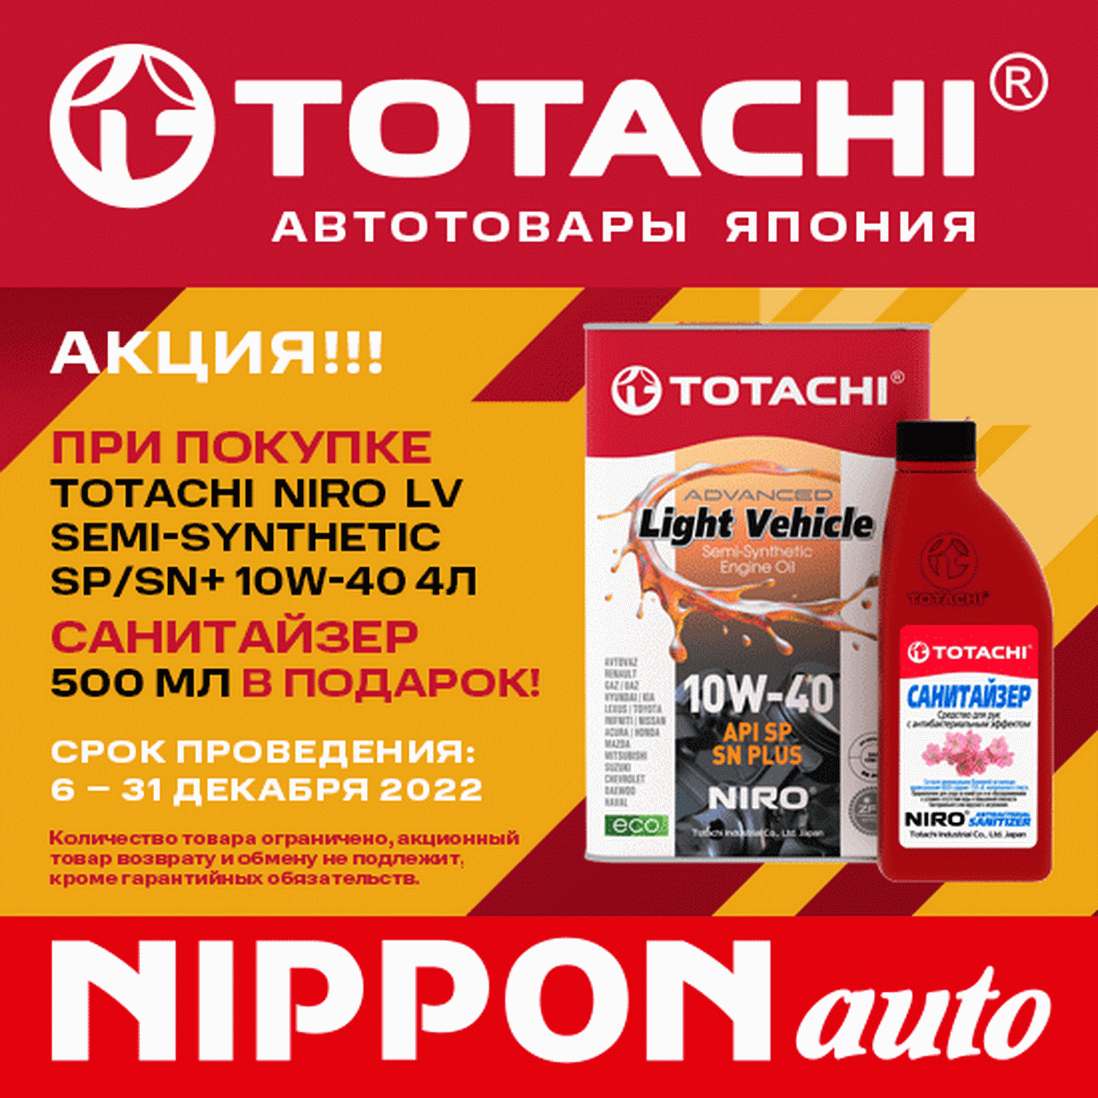 Totachi_Nippon_anons.png